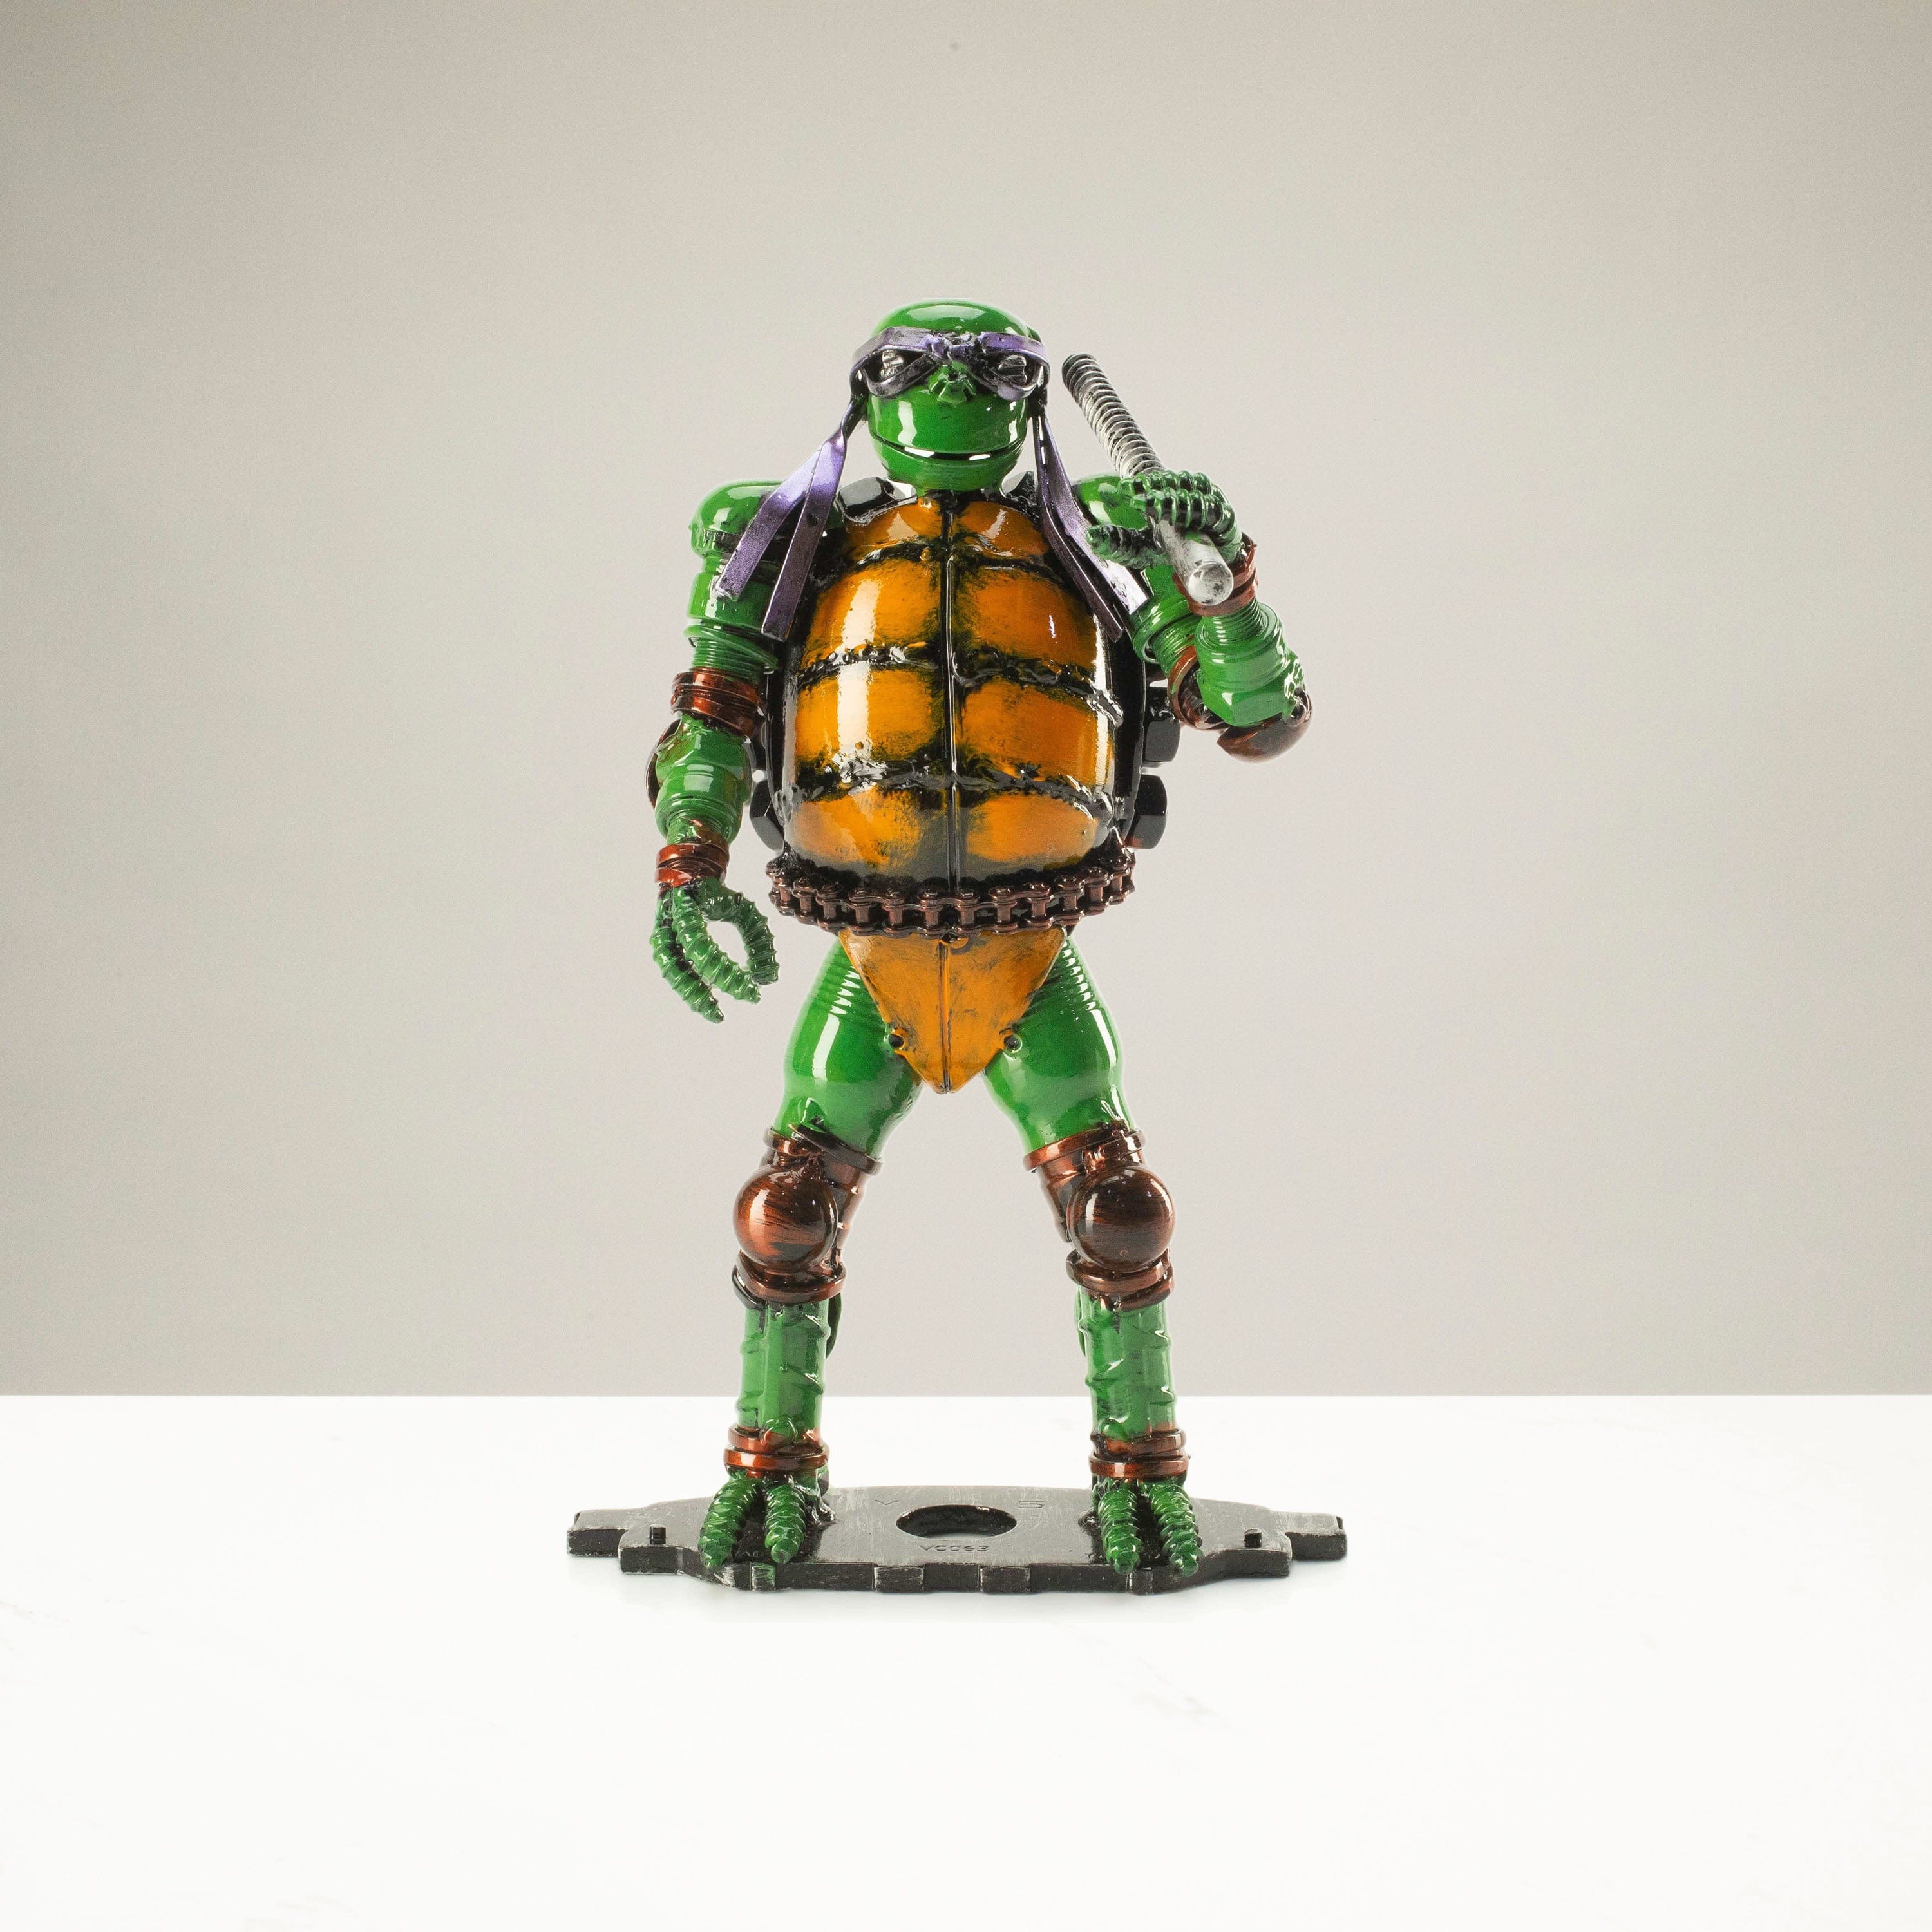 Kalifano Recycled Metal Art 9.5" Donatello Ninja Turtle Inspired Recycled Metal Sculpture RMS-600NTD-N